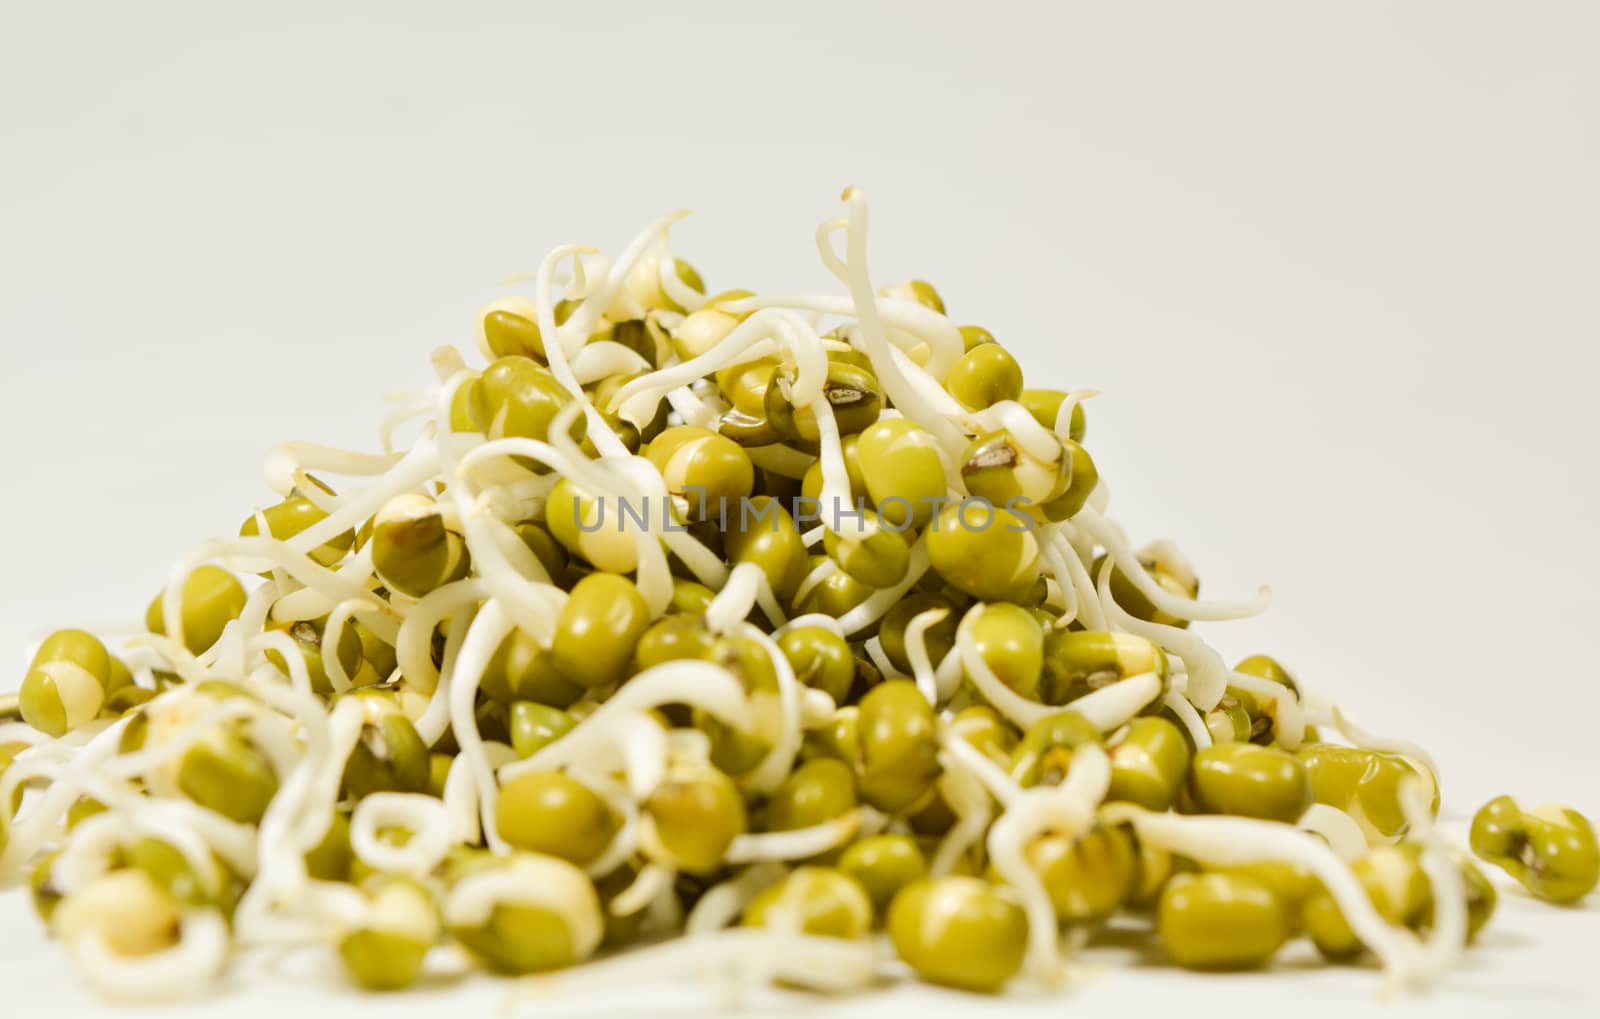 sprouted green gram on isolated white background by lakshmiprasad.maski@gmai.com